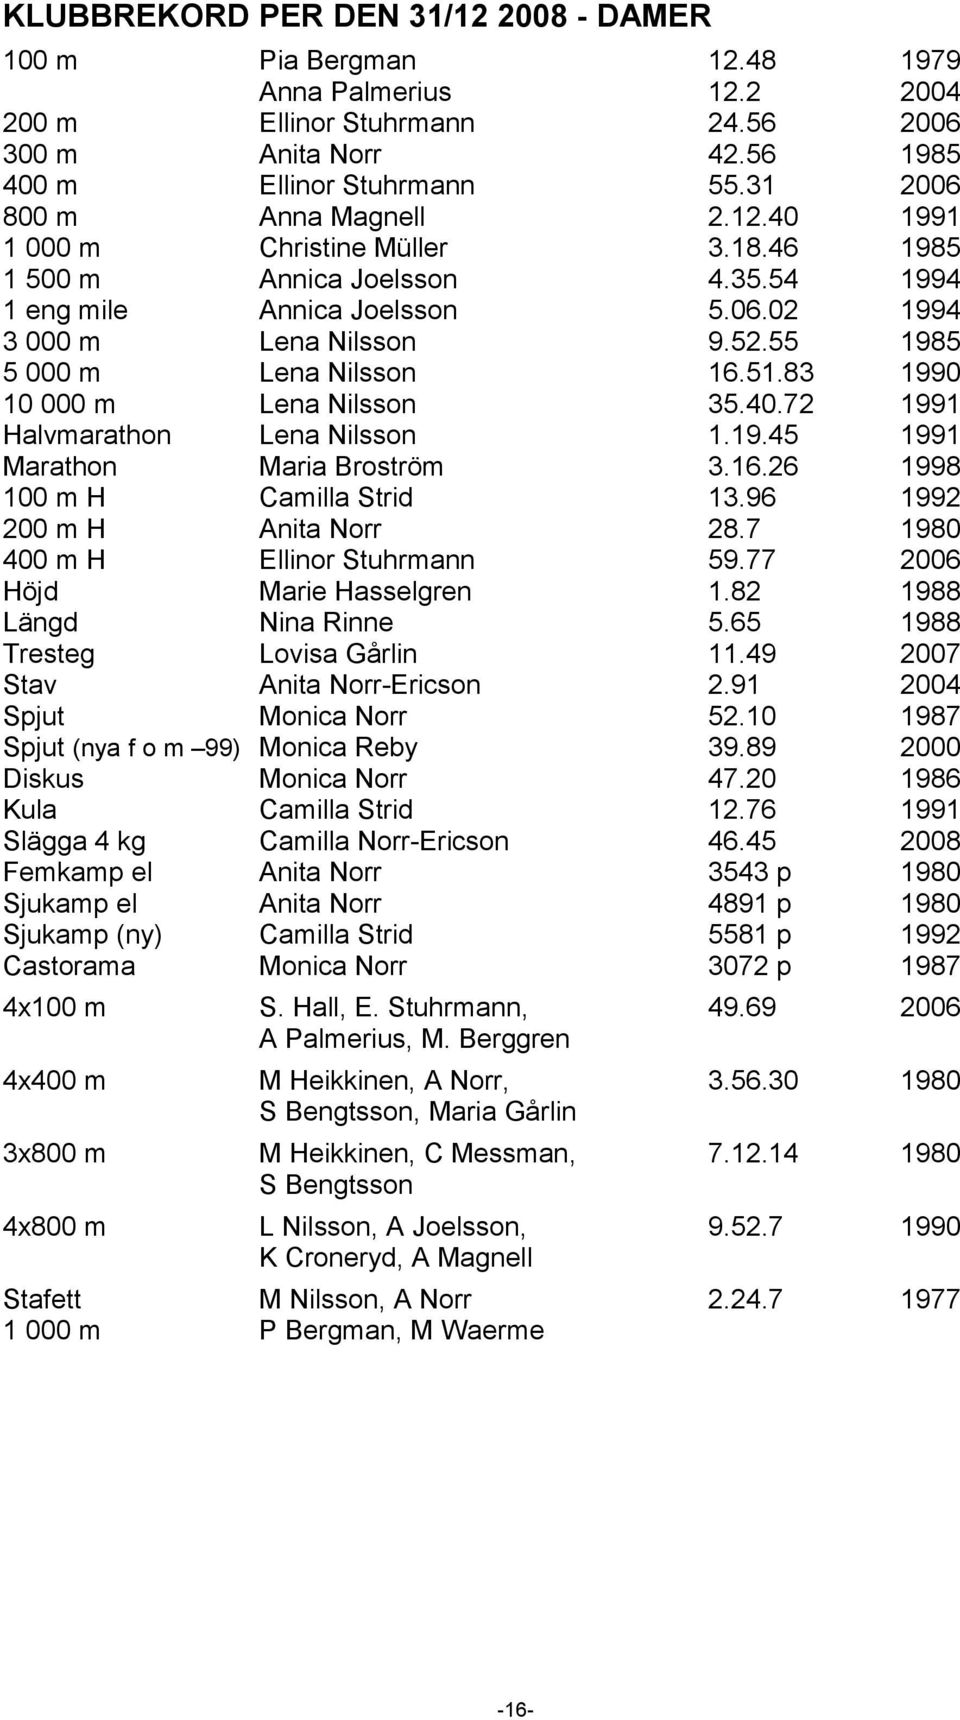 55 1985 5 000 m Lena Nilsson 16.51.83 1990 10 000 m Lena Nilsson 35.40.72 1991 Halvmarathon Lena Nilsson 1.19.45 1991 Marathon Maria Broström 3.16.26 1998 100 m H Camilla Strid 13.